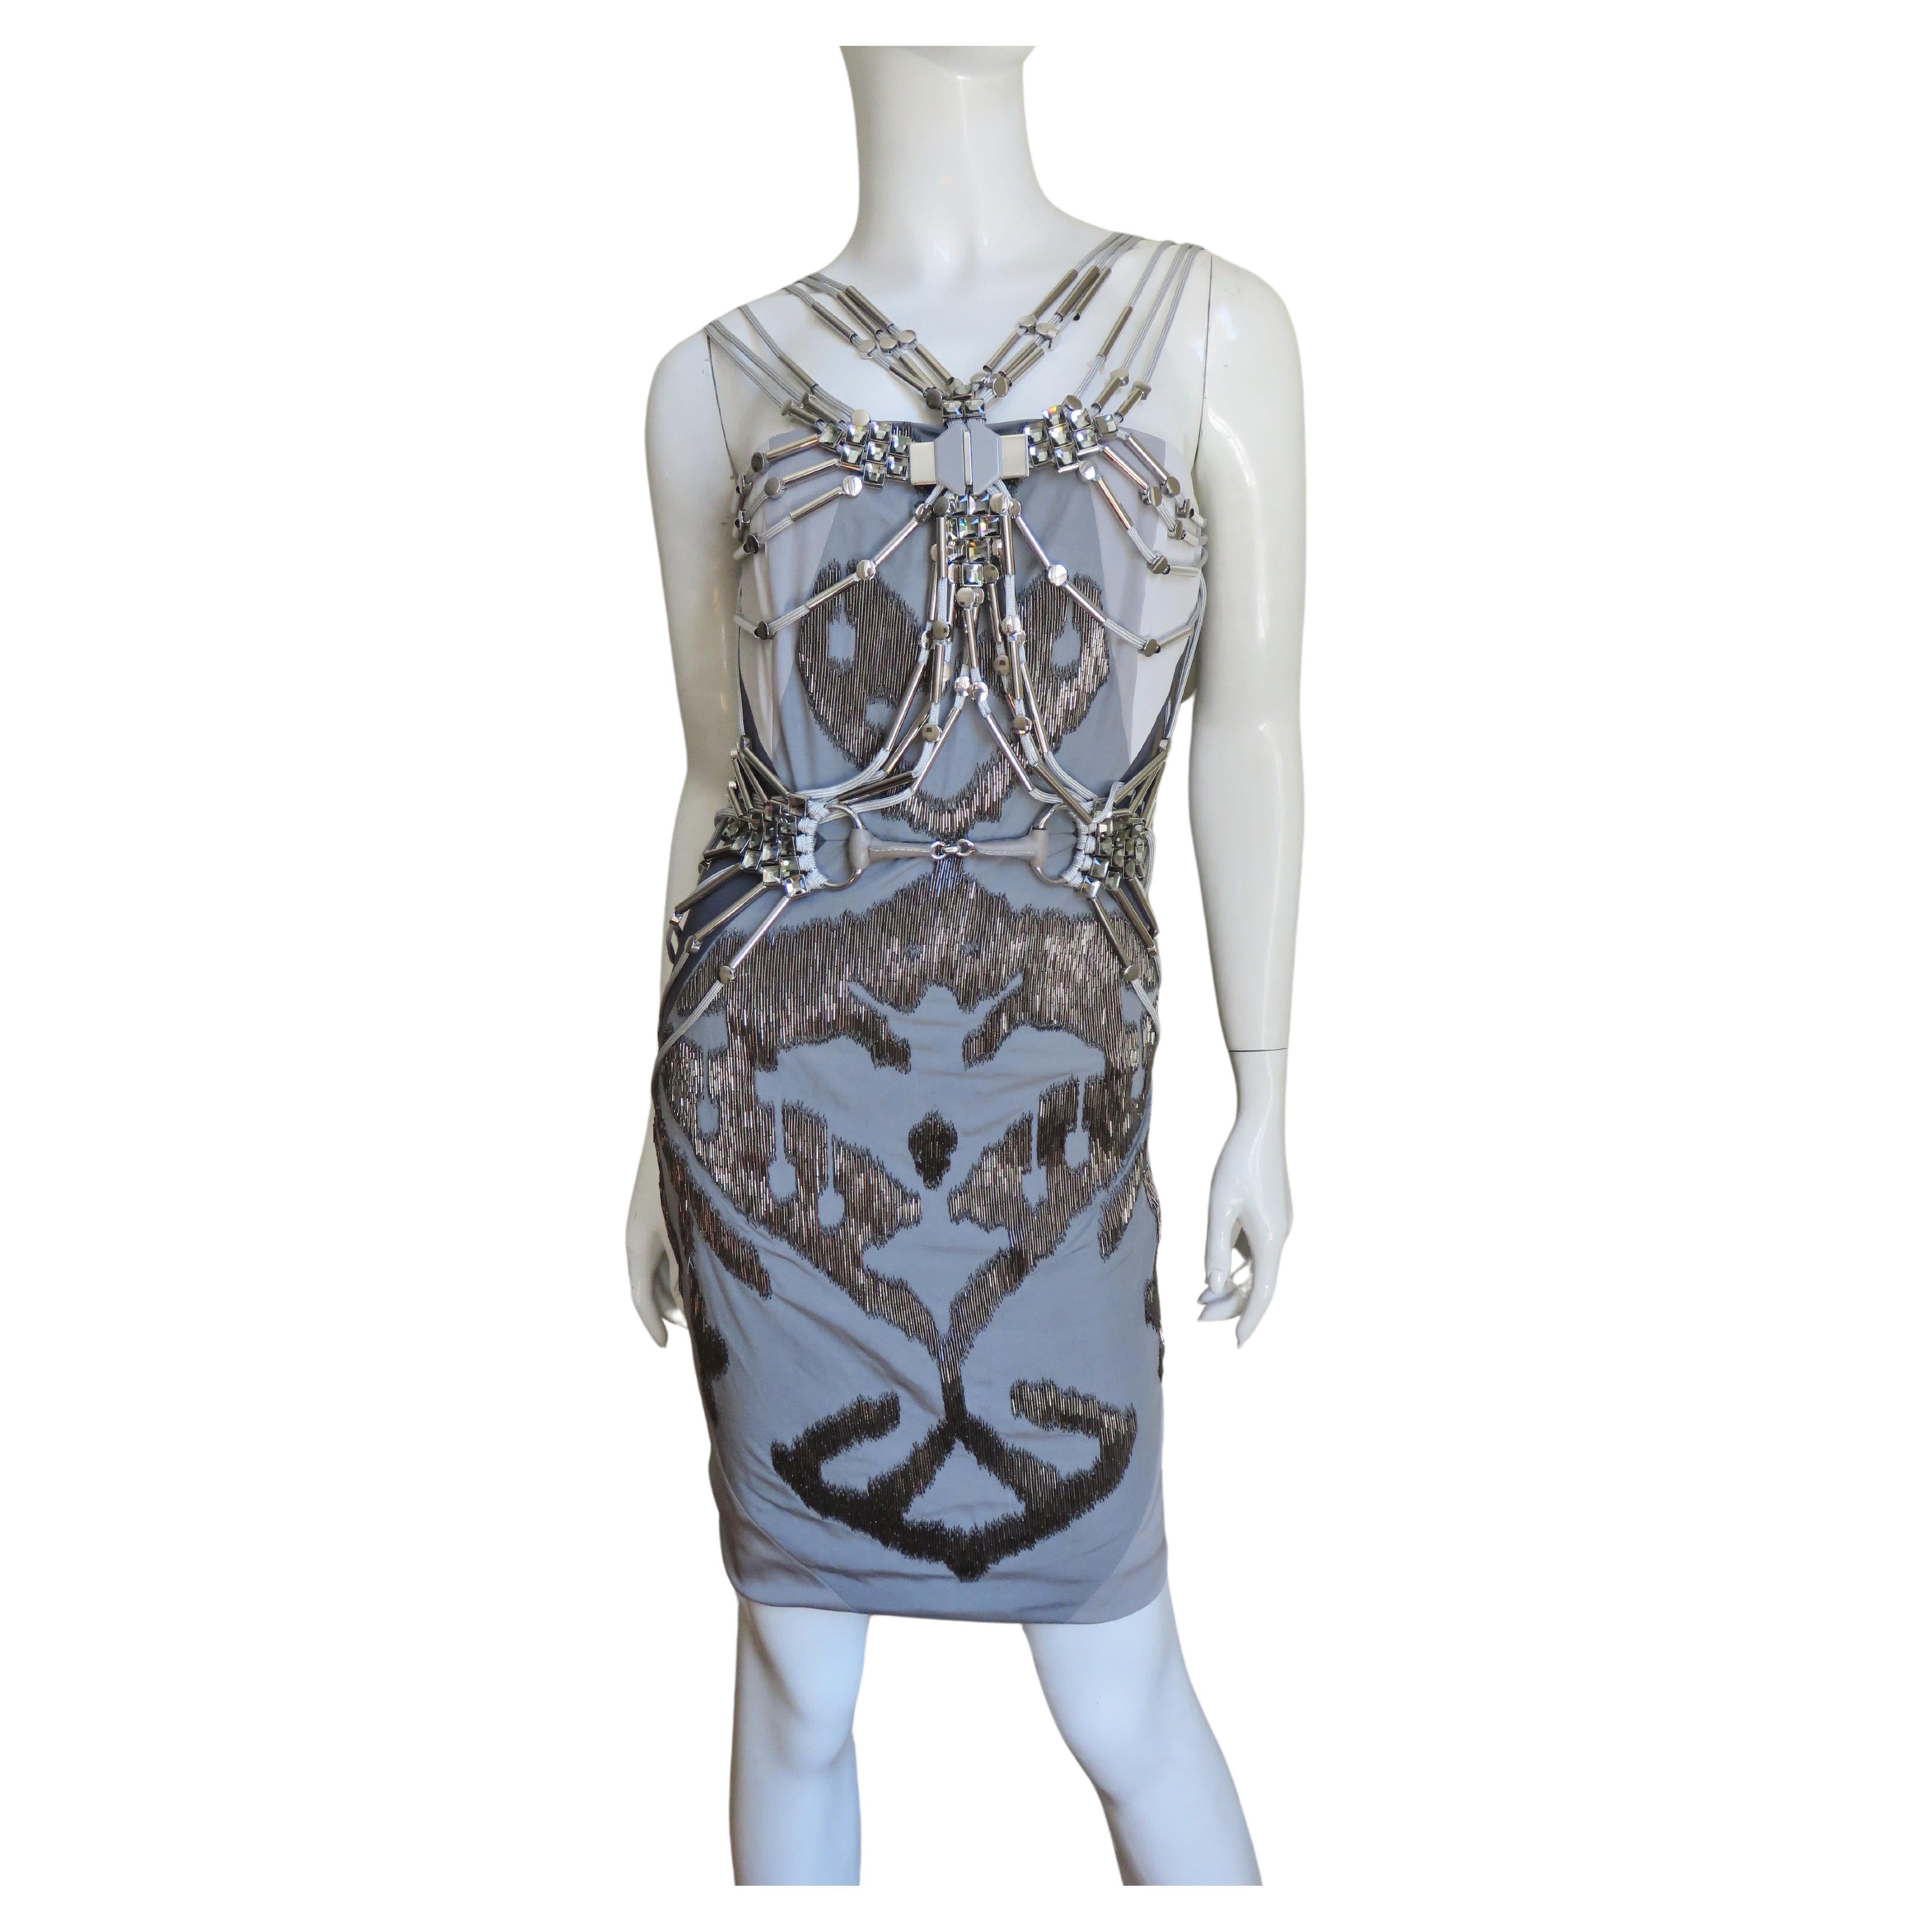 Gucci Magazine Cover Swarovski Crystal and Bead Embellished Silk Dress SS 2010